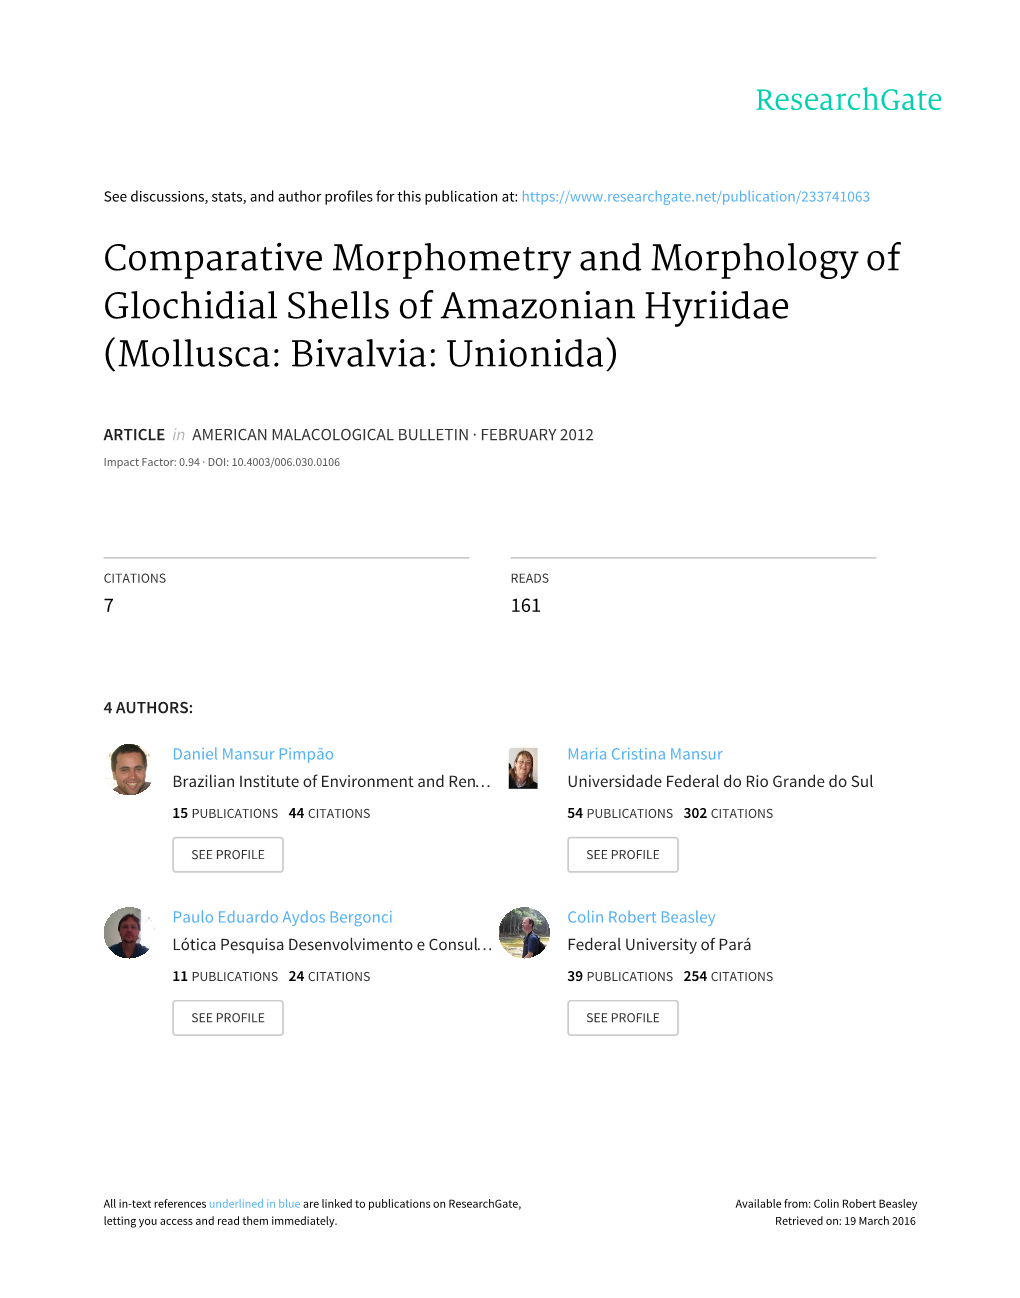 Comparative Morphometry and Morphology of Glochidial Shells of Amazonian Hyriidae (Mollusca: Bivalvia: Unionida)